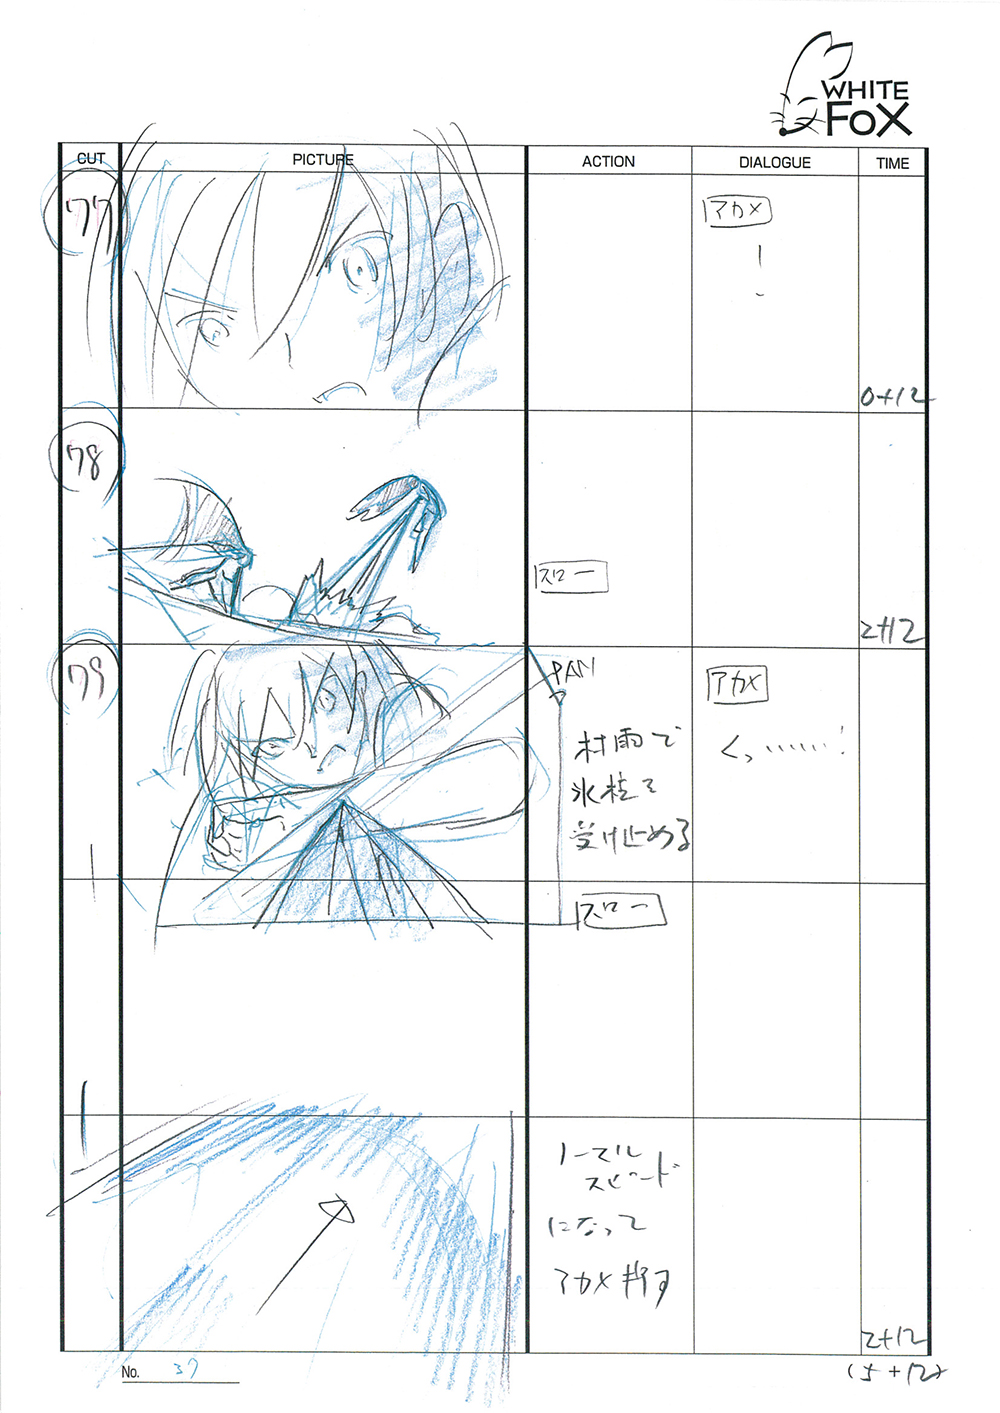 Akame ga Kill Episode 24 Storyboard Leak 039